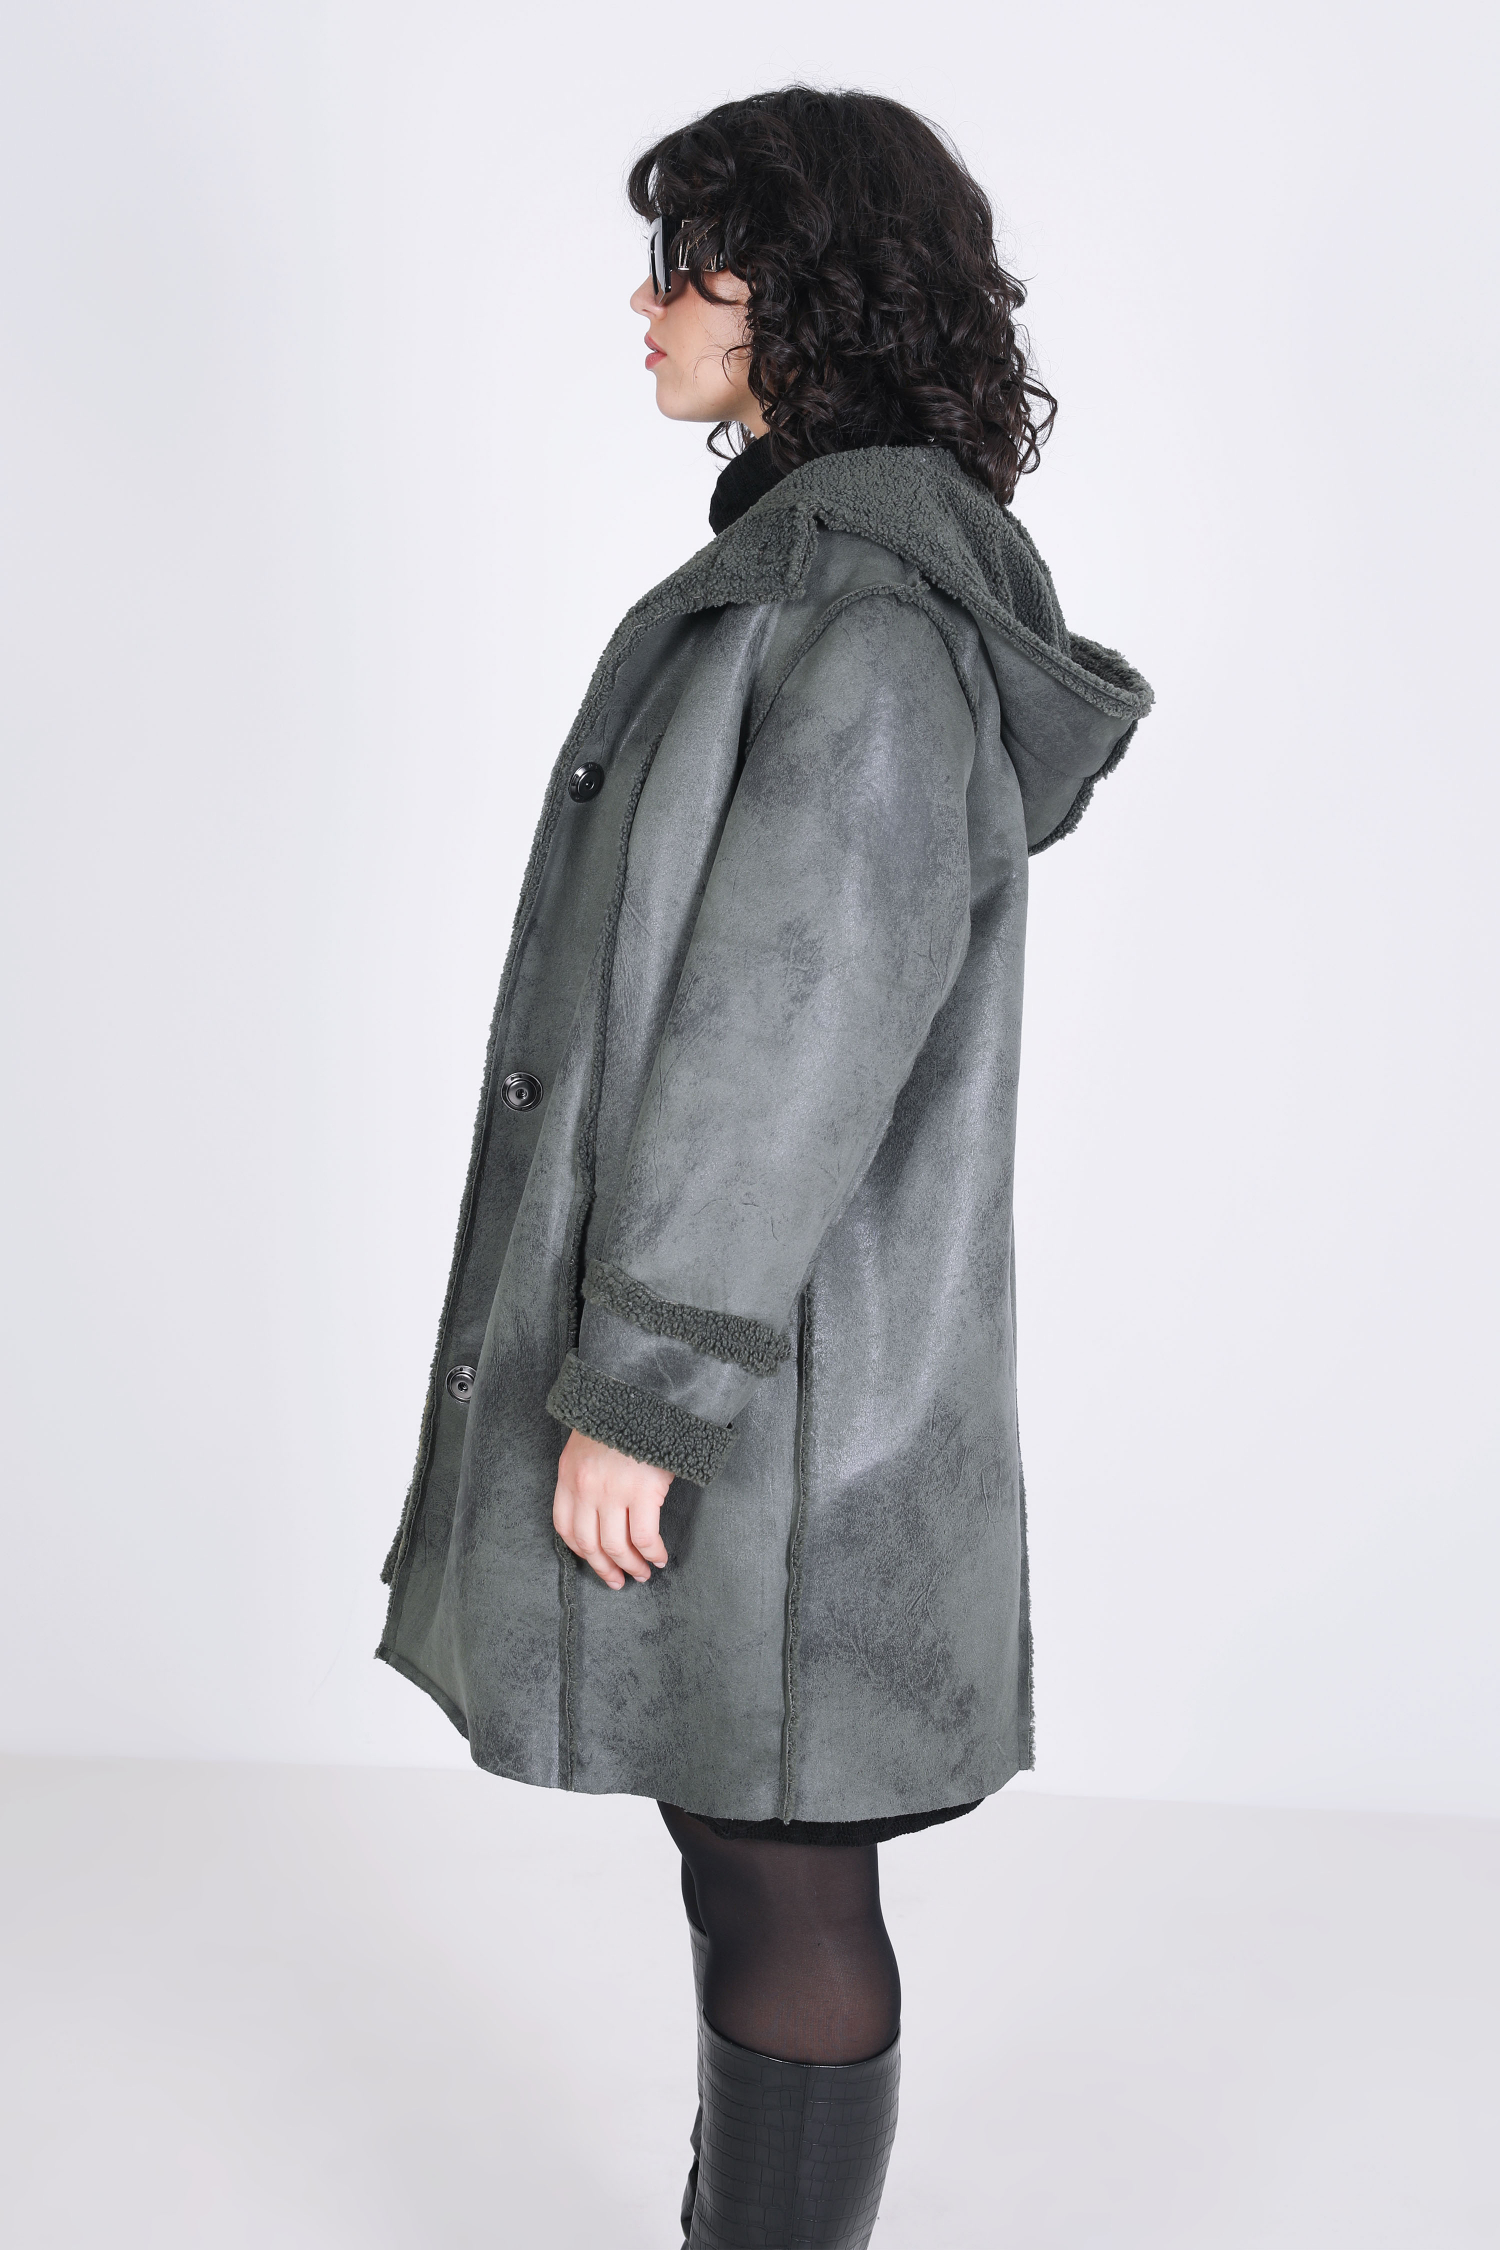 7/8 faux sheepskin coat with hood